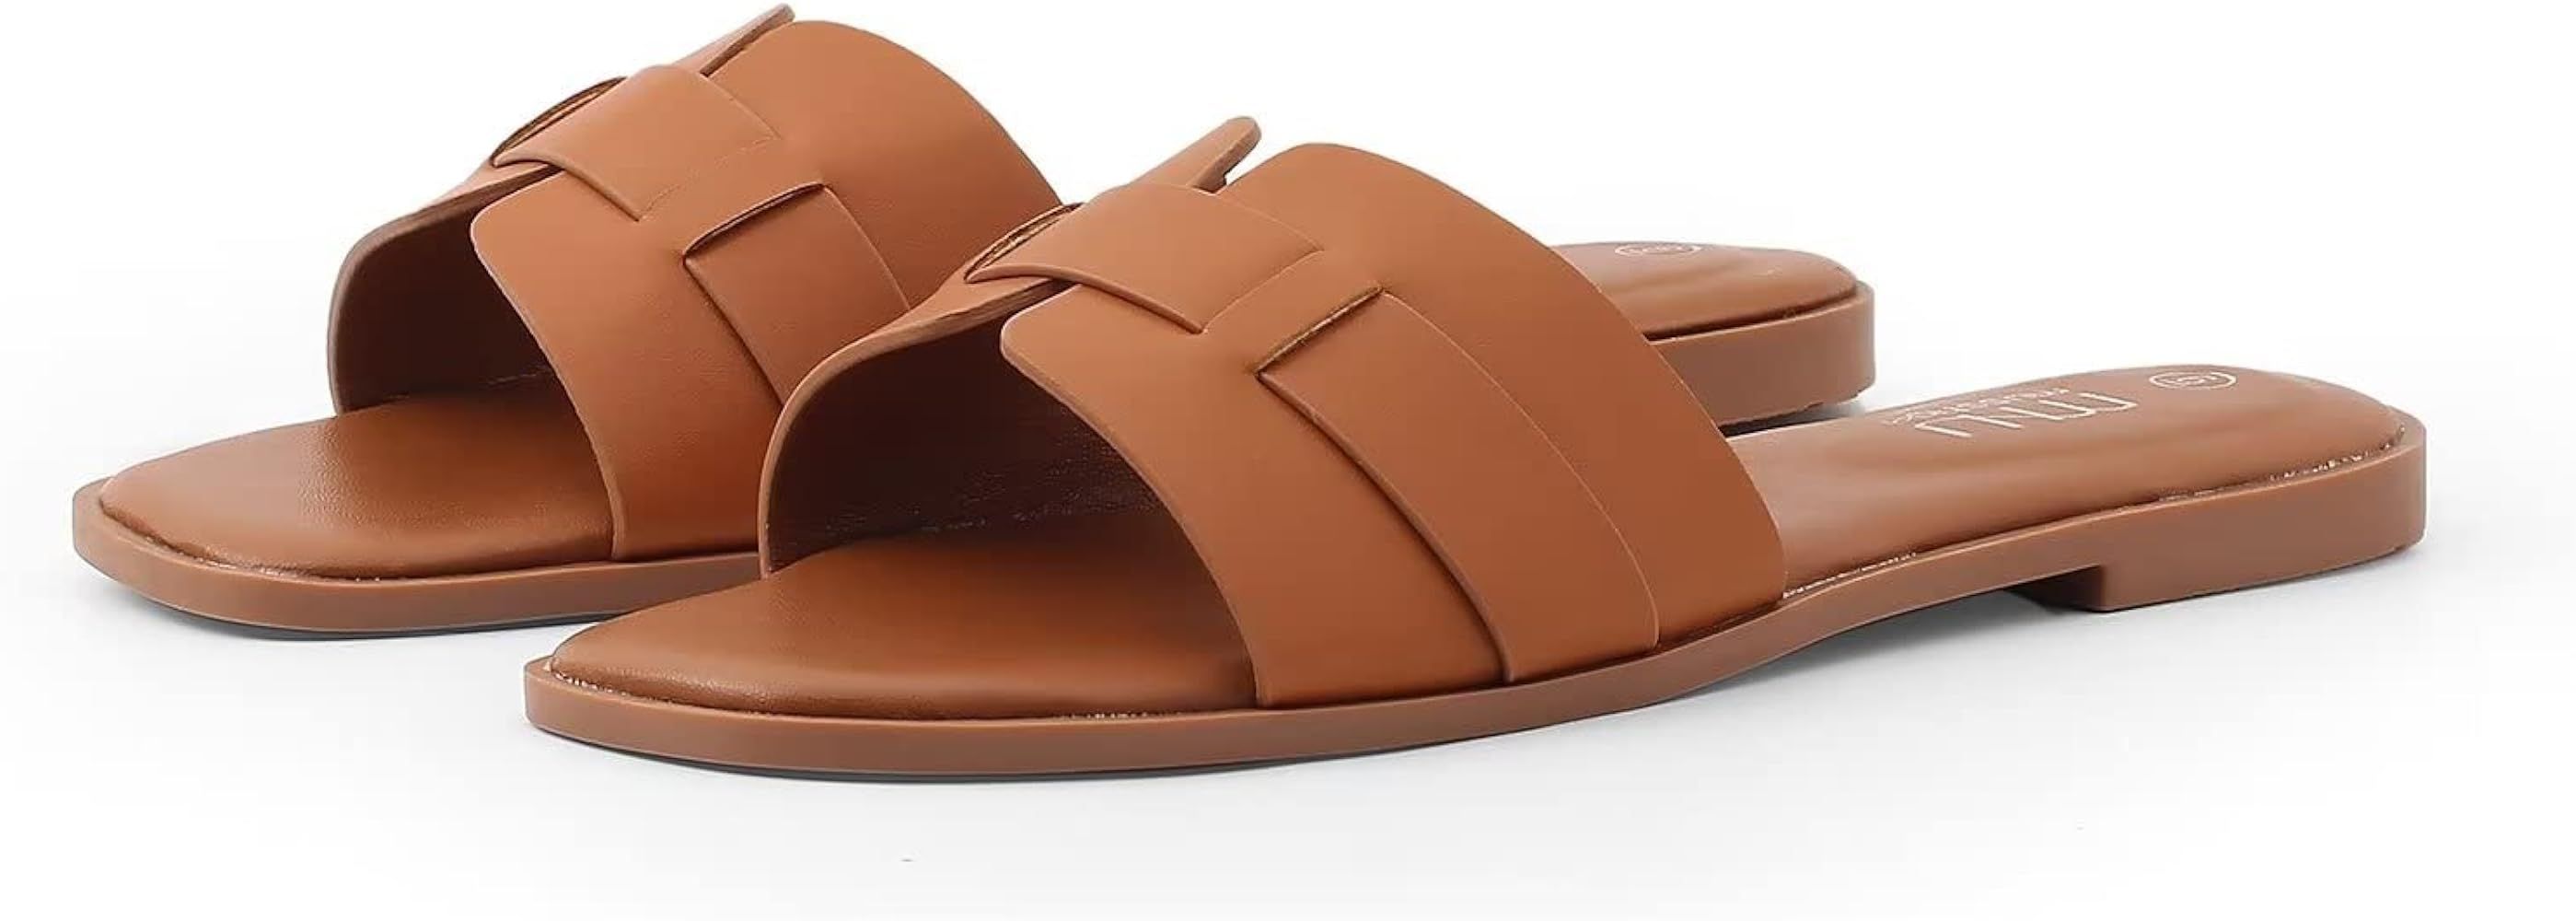 MUSSHOE Womens Sandals Square Toe Dressy Summer Sandals | Amazon (US)